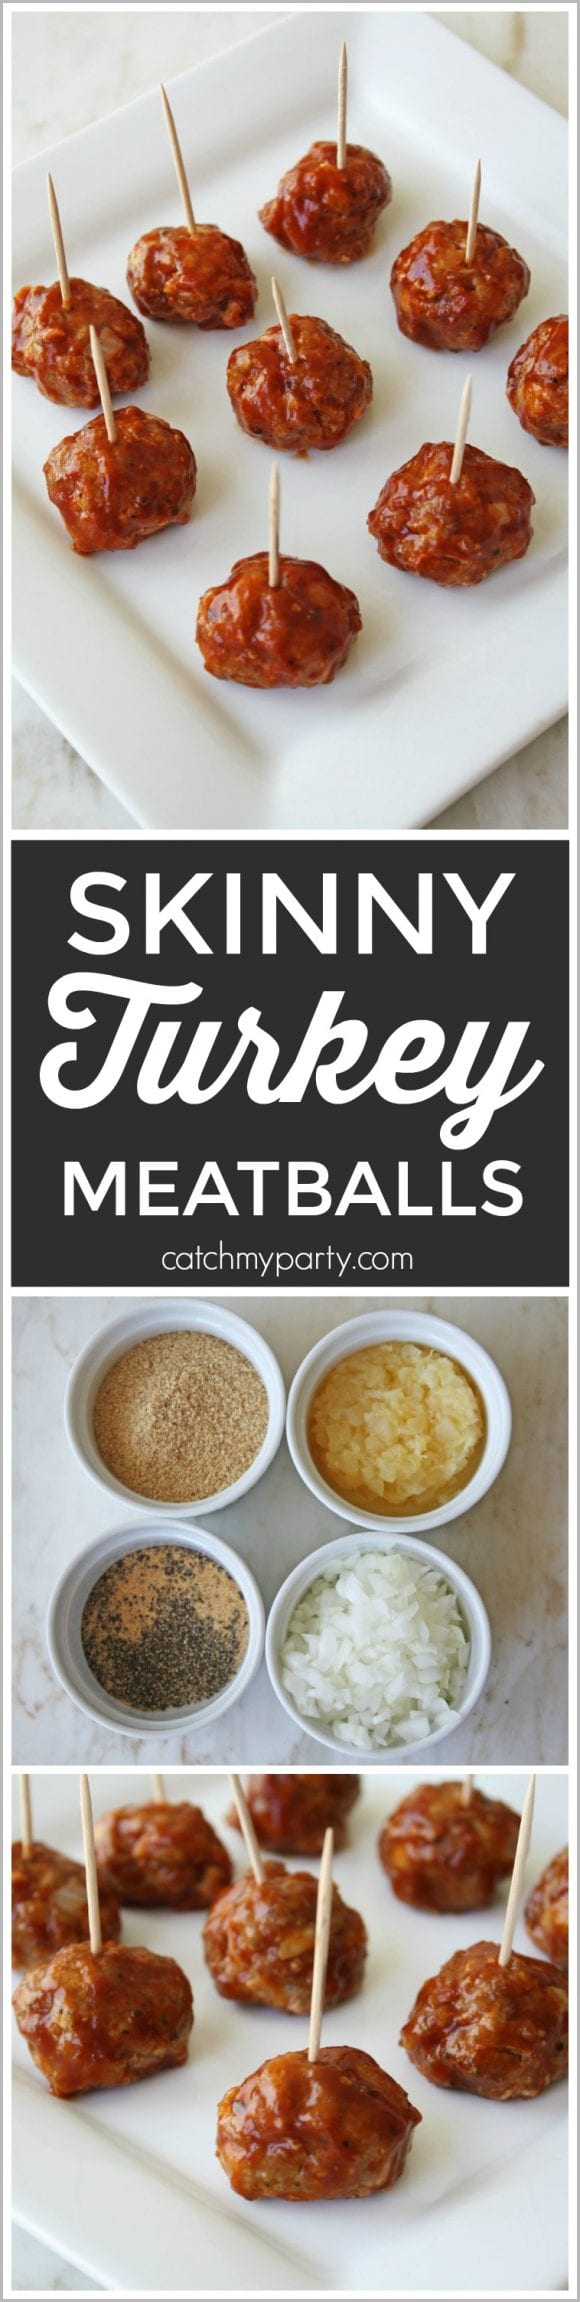 Skinny Meatball Recipe With Turkey | CatchMyParty.com